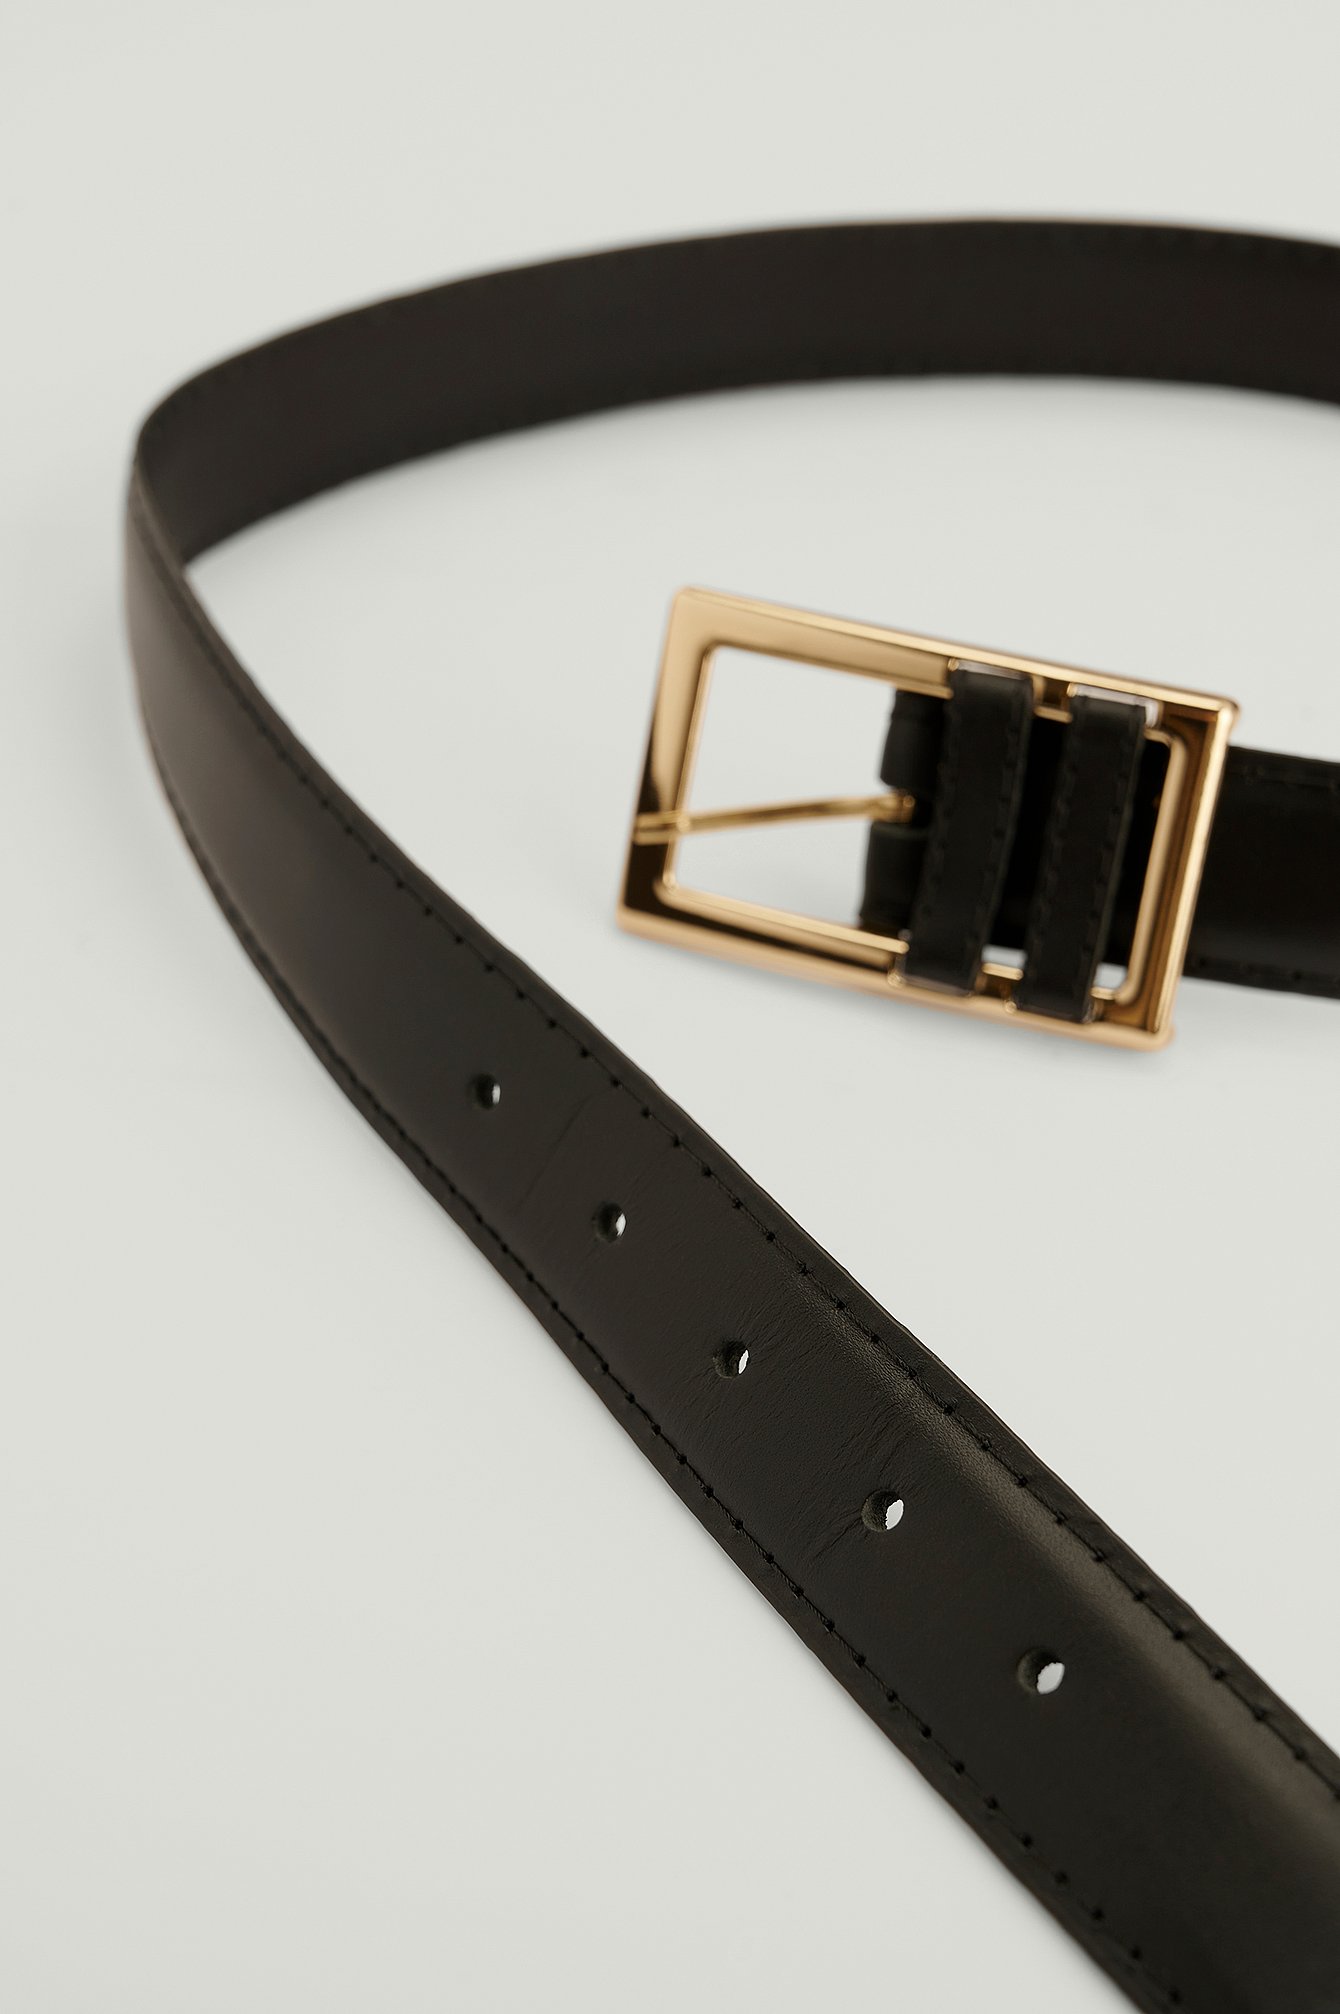 Black Rectangular Buckle Leather Belt